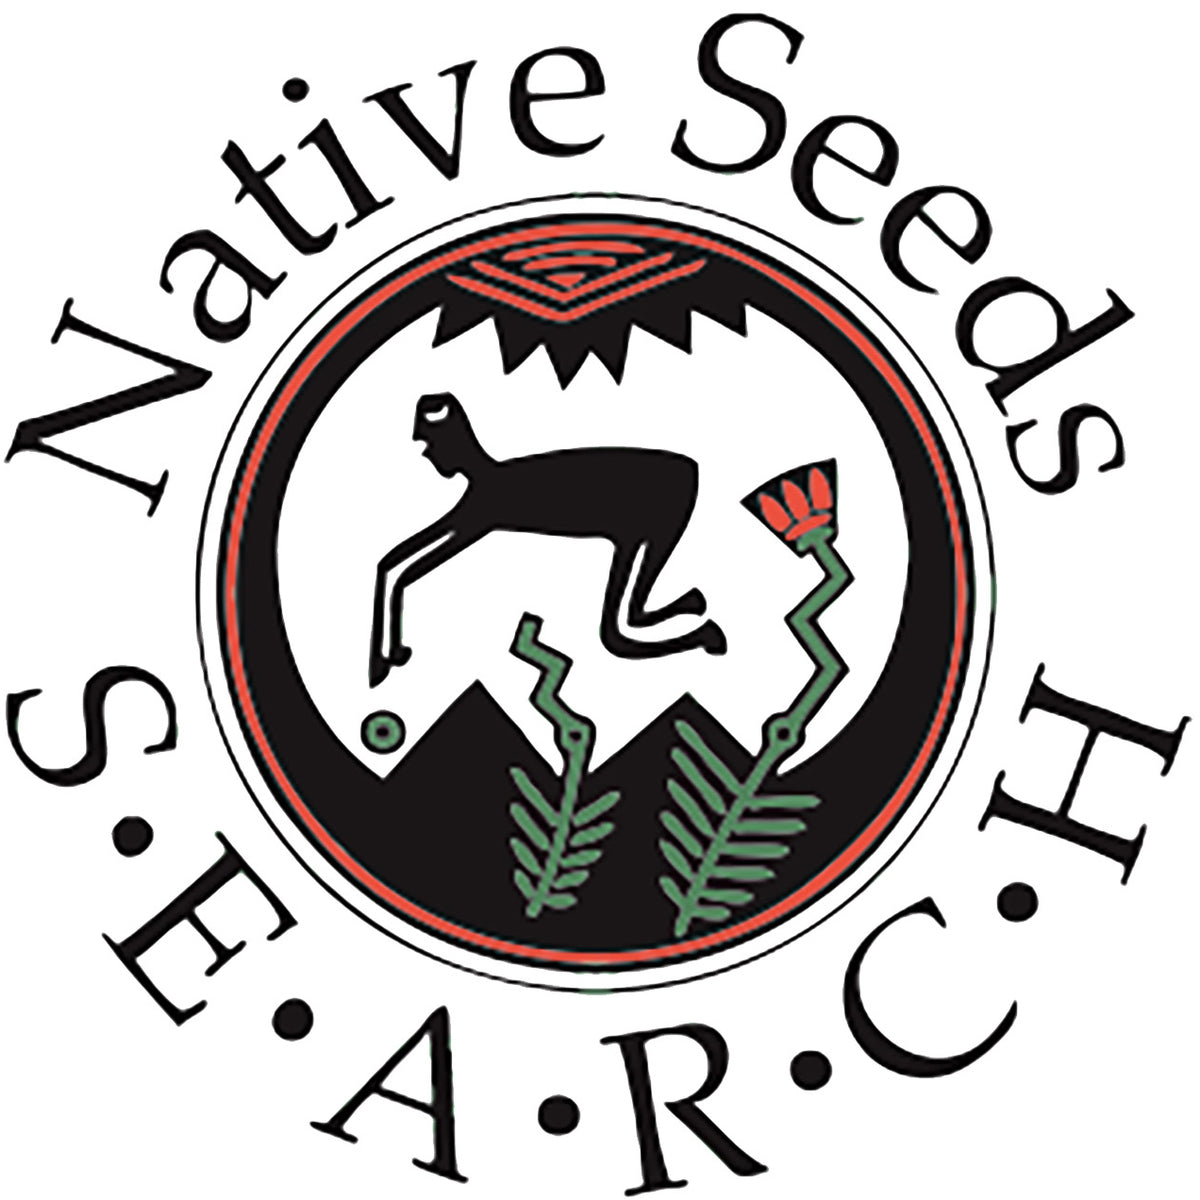 www.nativeseeds.org